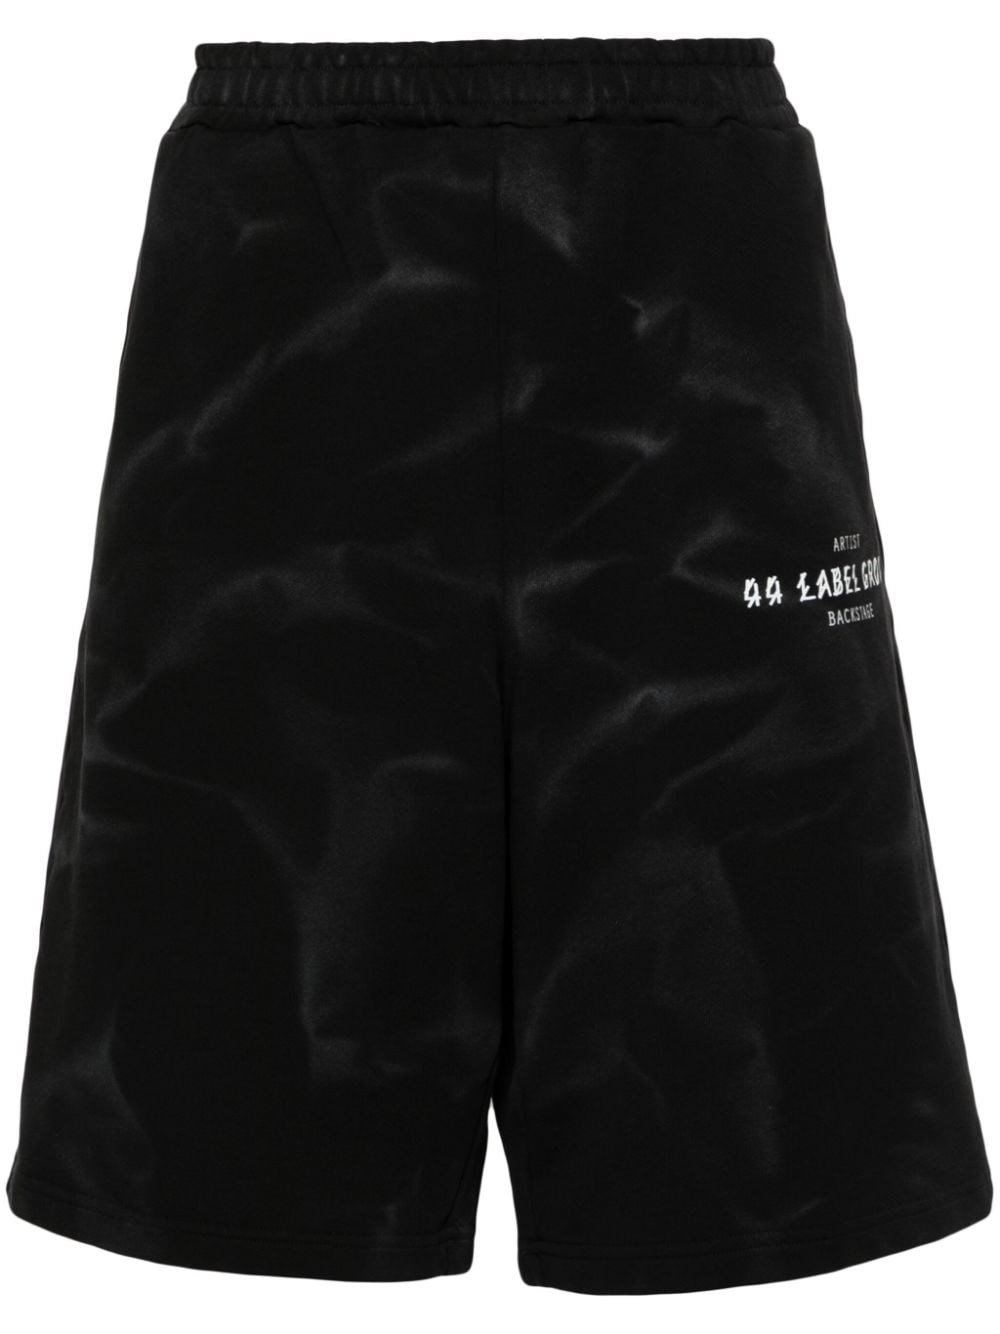 Shop 44 Label Group Printed Bermuda Shorts In Black  